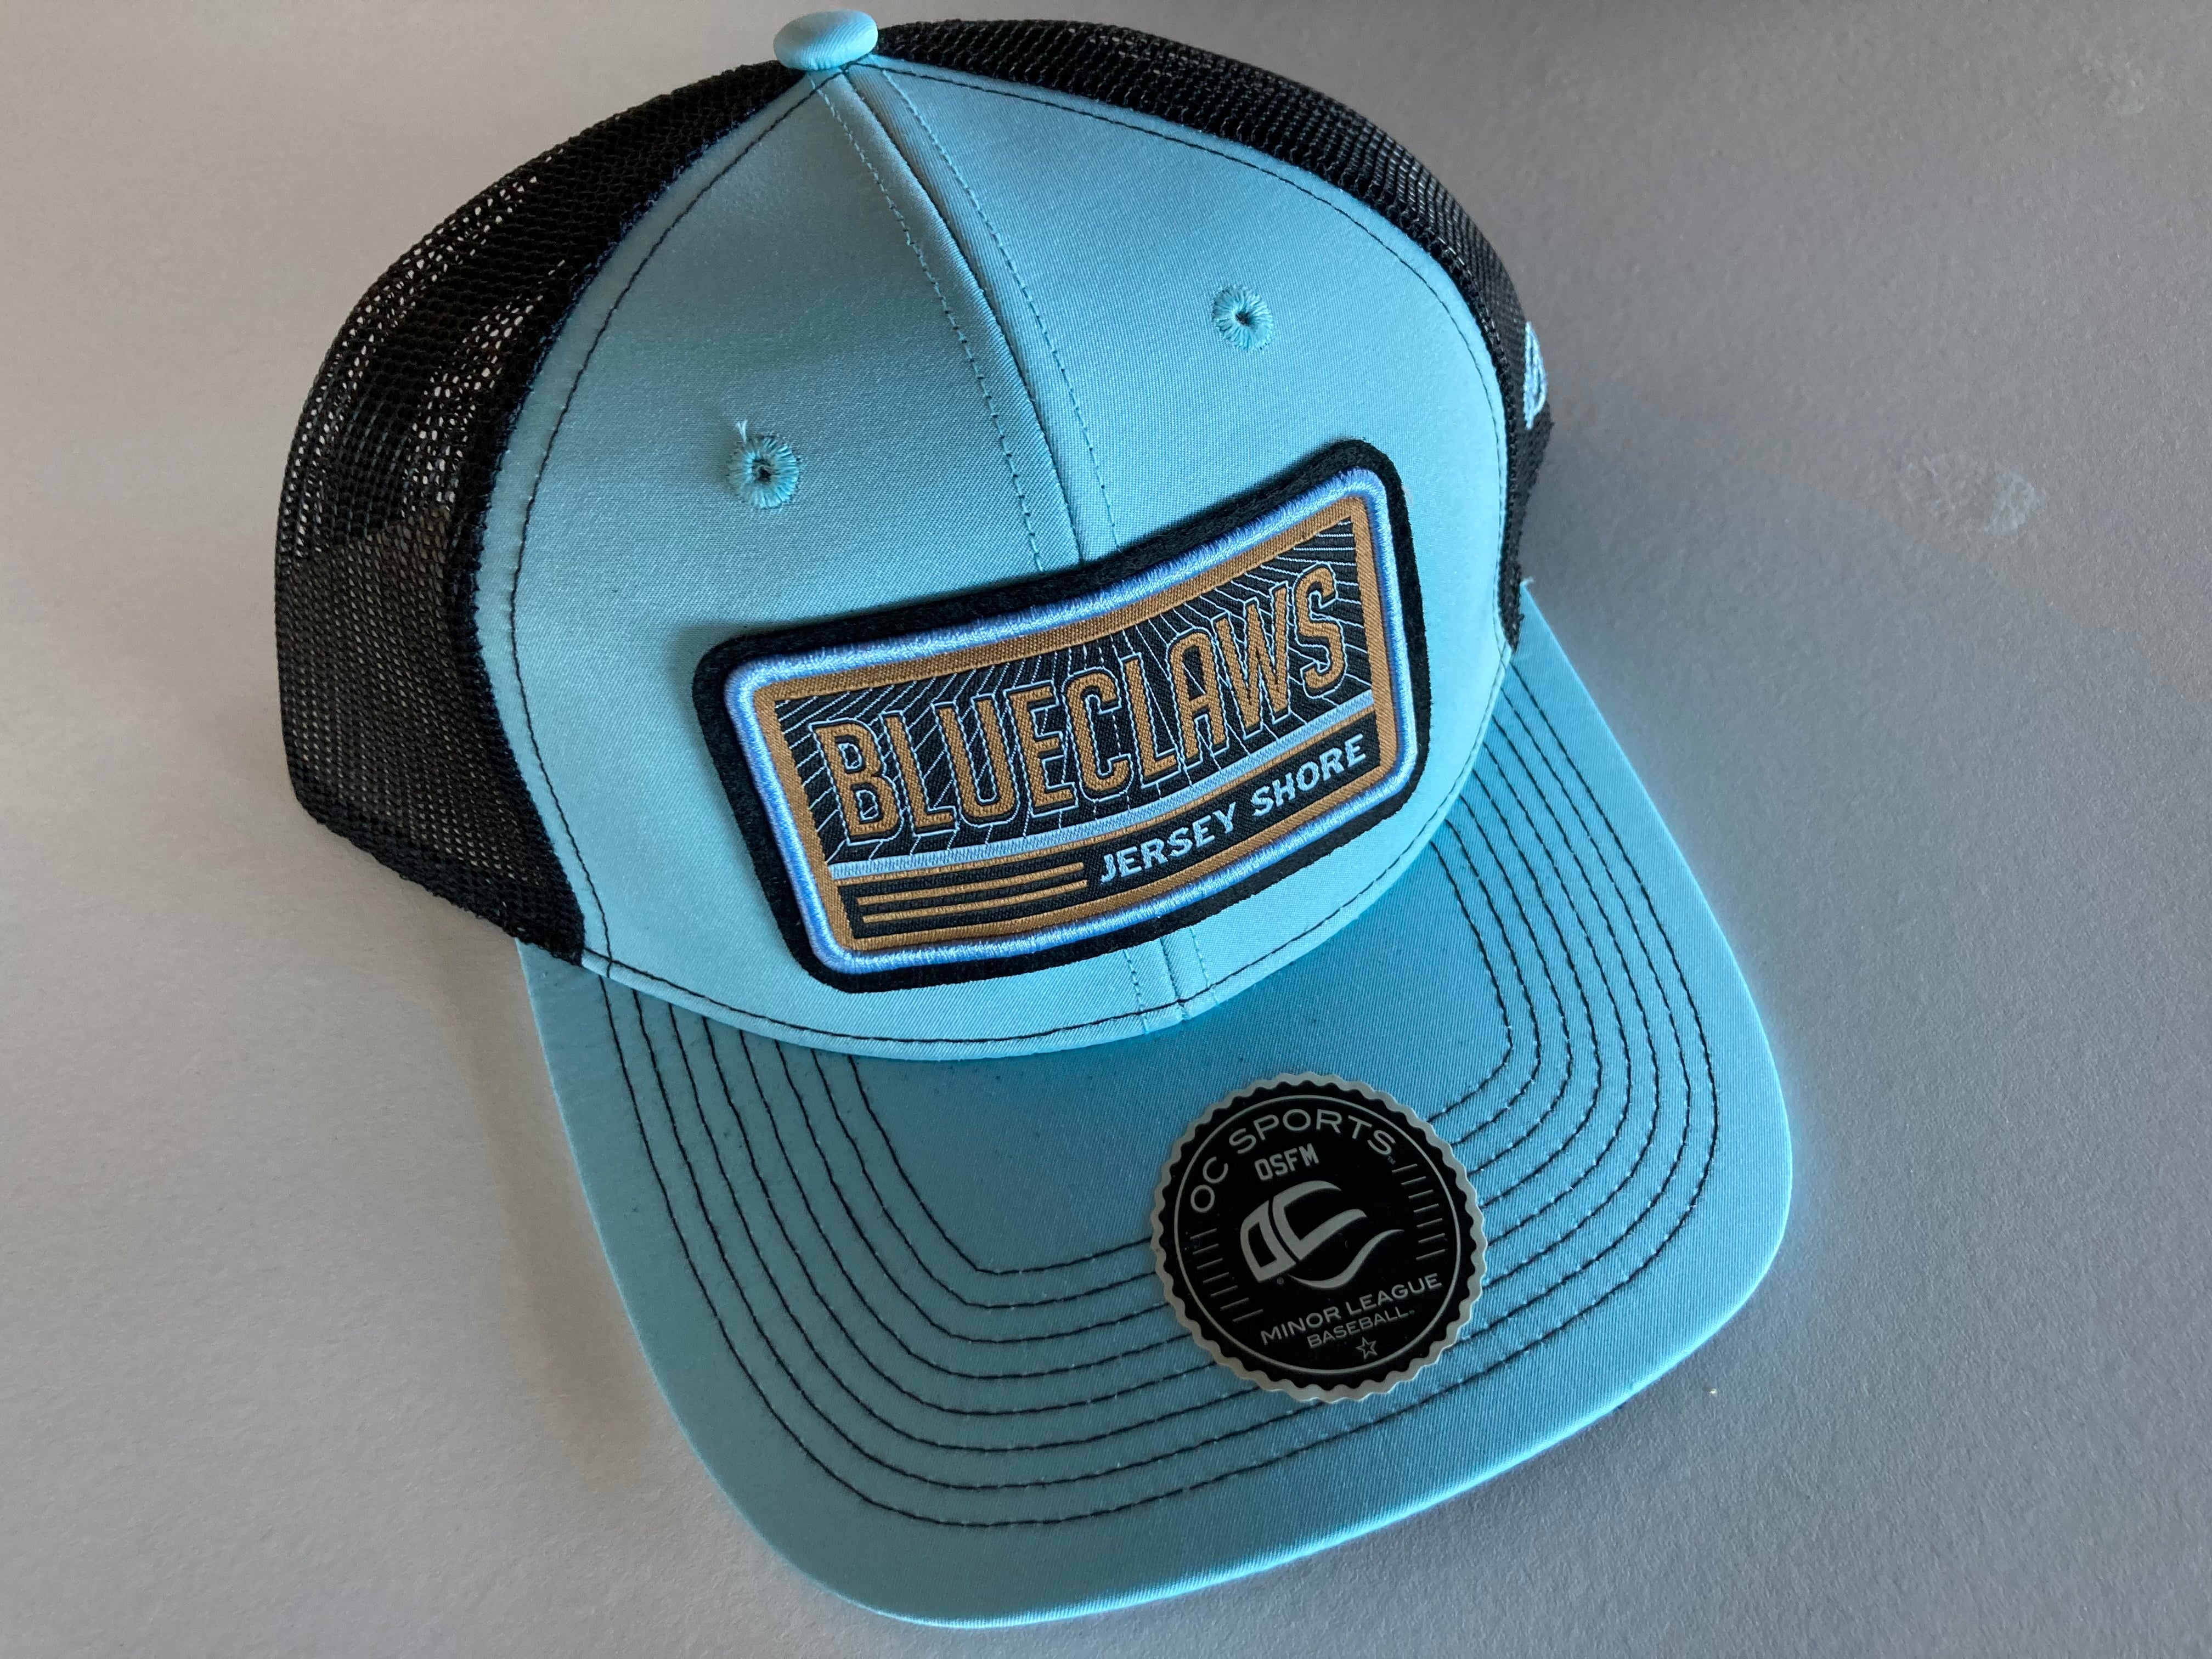 Lotto Fishing Hat Cap Snapback Blue White Adjustable Trucker